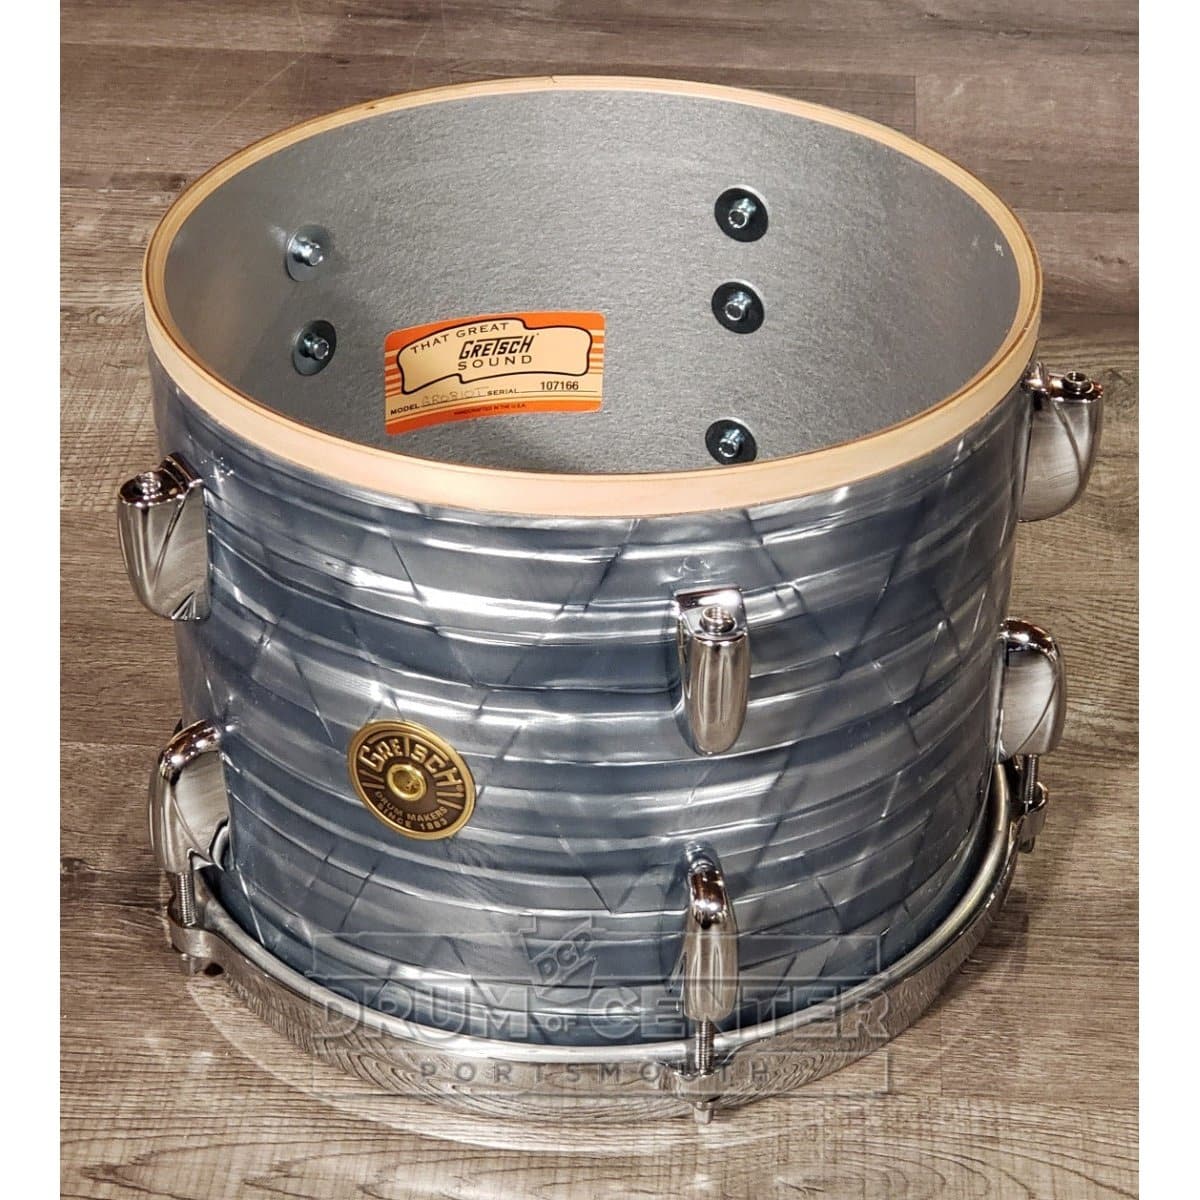 Gretsch USA Custom 5pc Drum Set Sky Blue Pearl